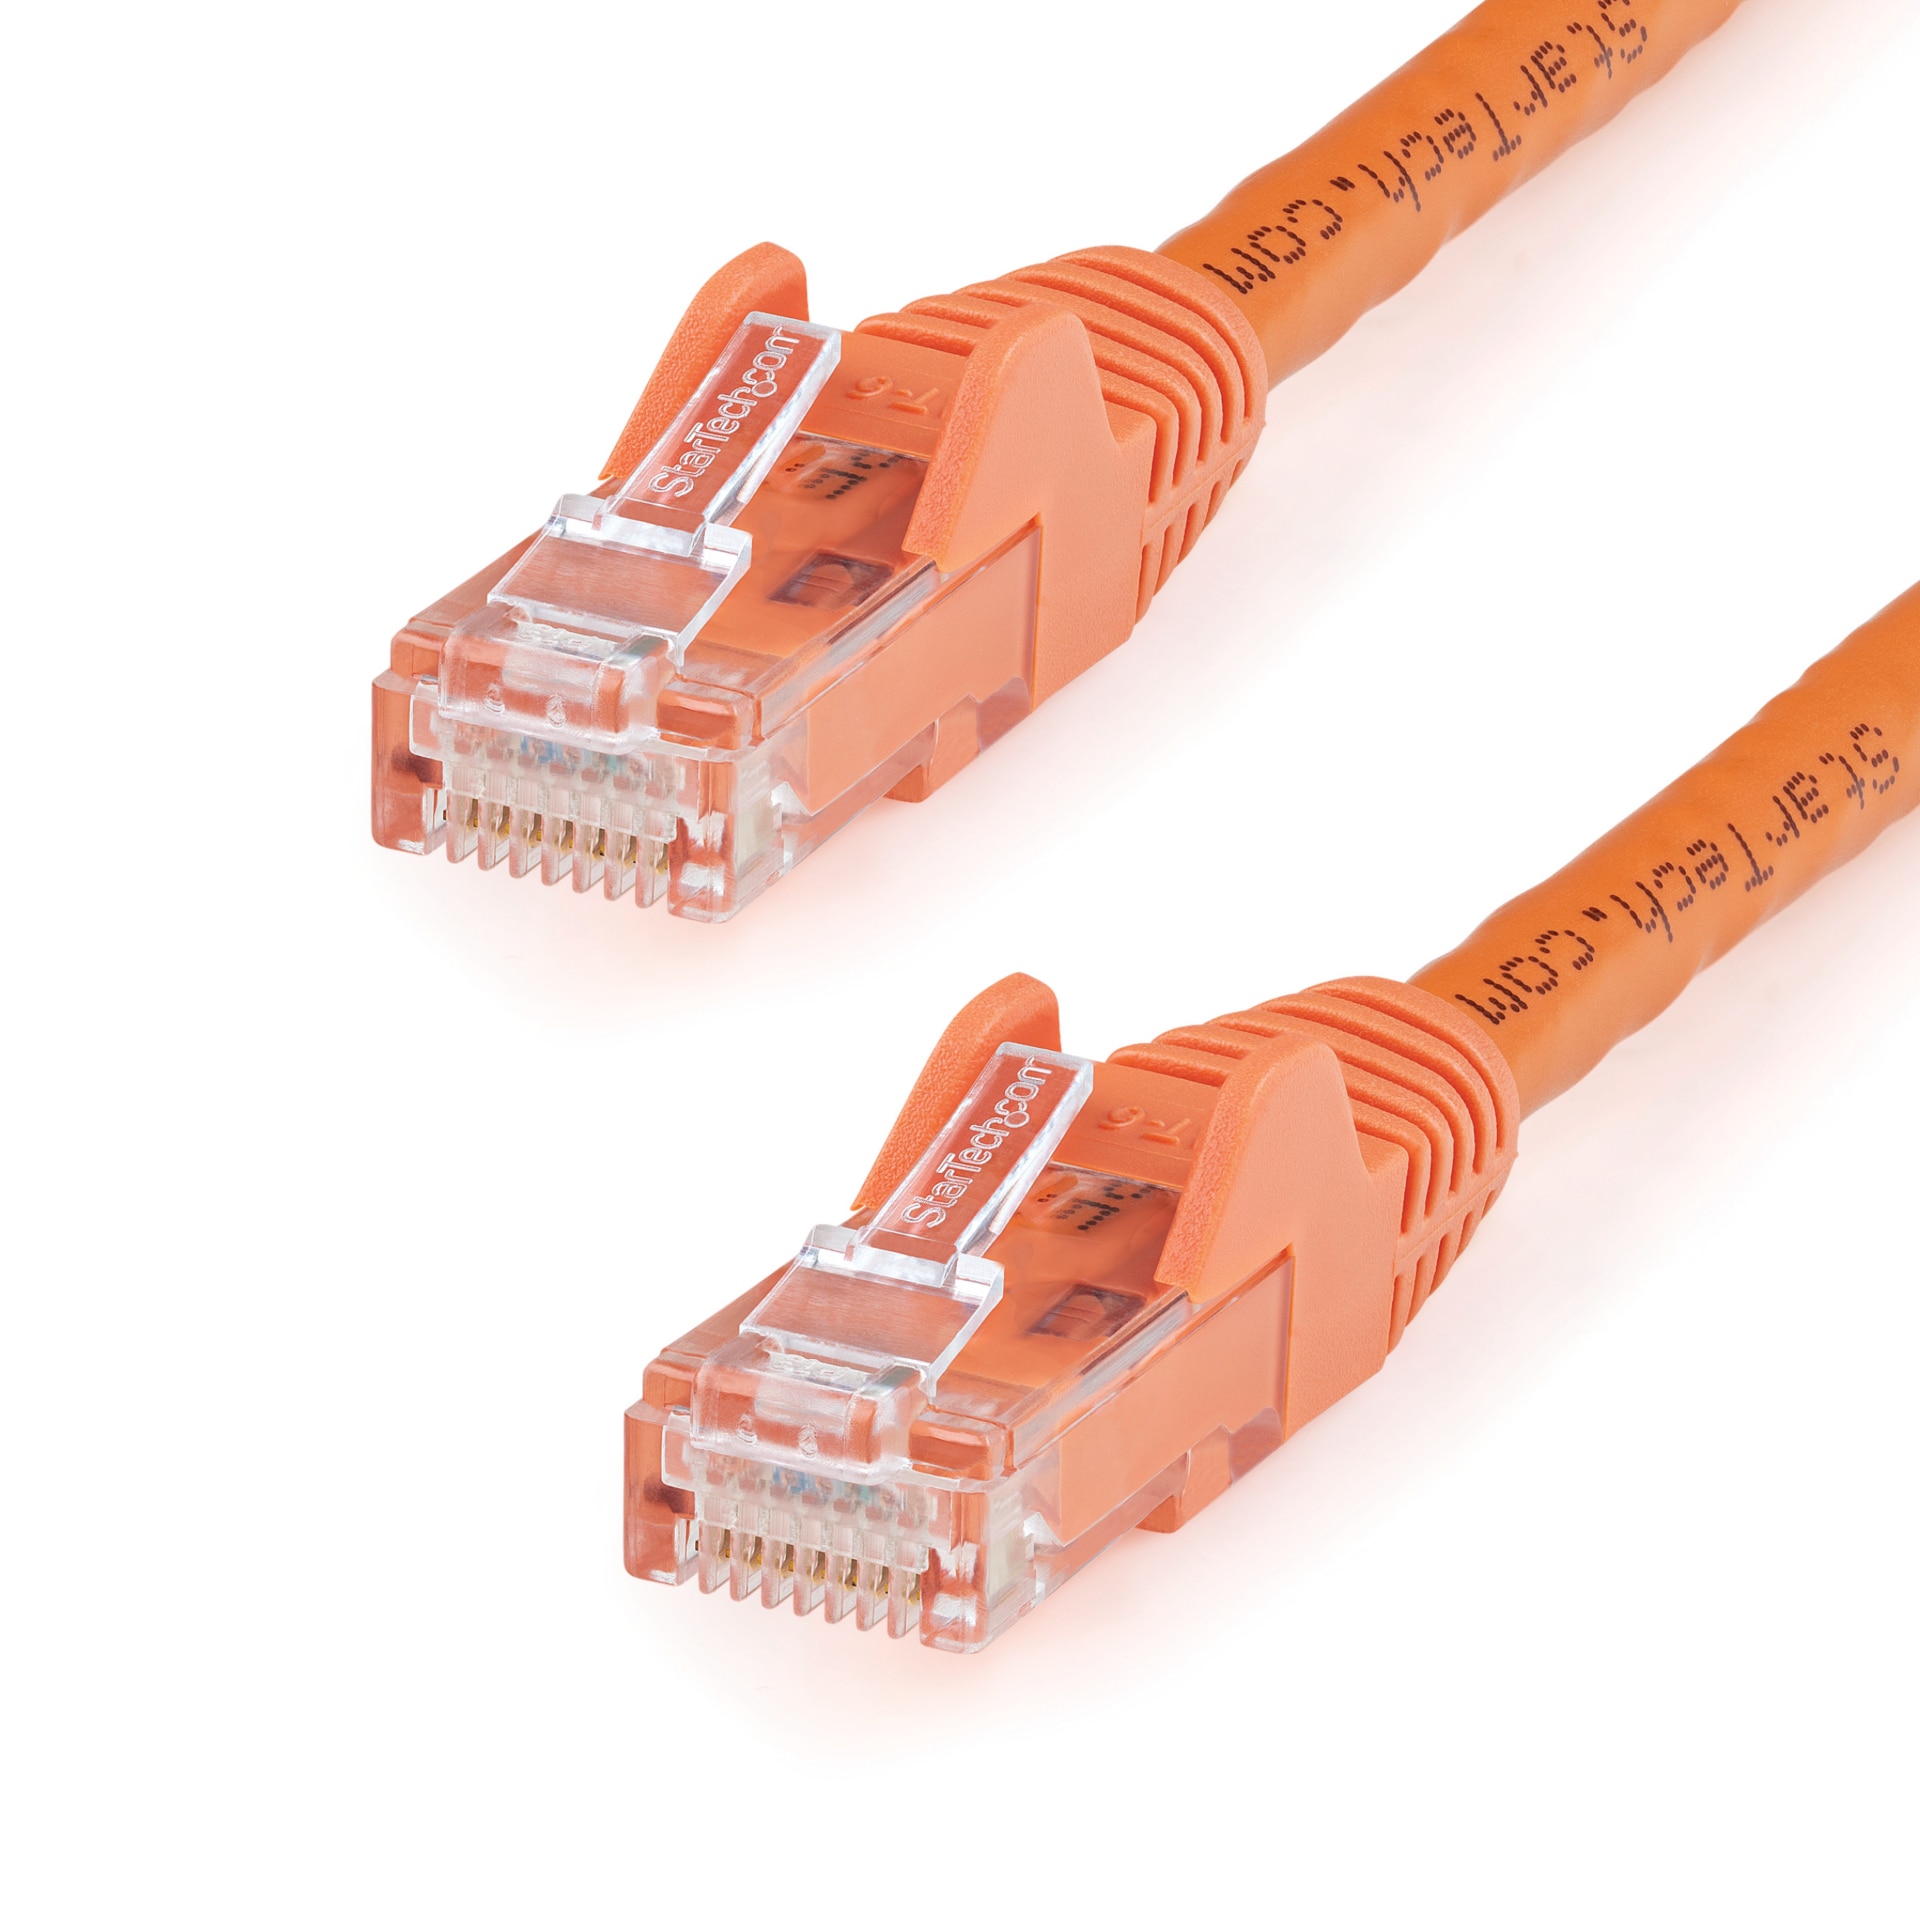 StarTech.com CAT6 Ethernet Cable 10' Orange 650MHz PoE Snagless Patch Cord